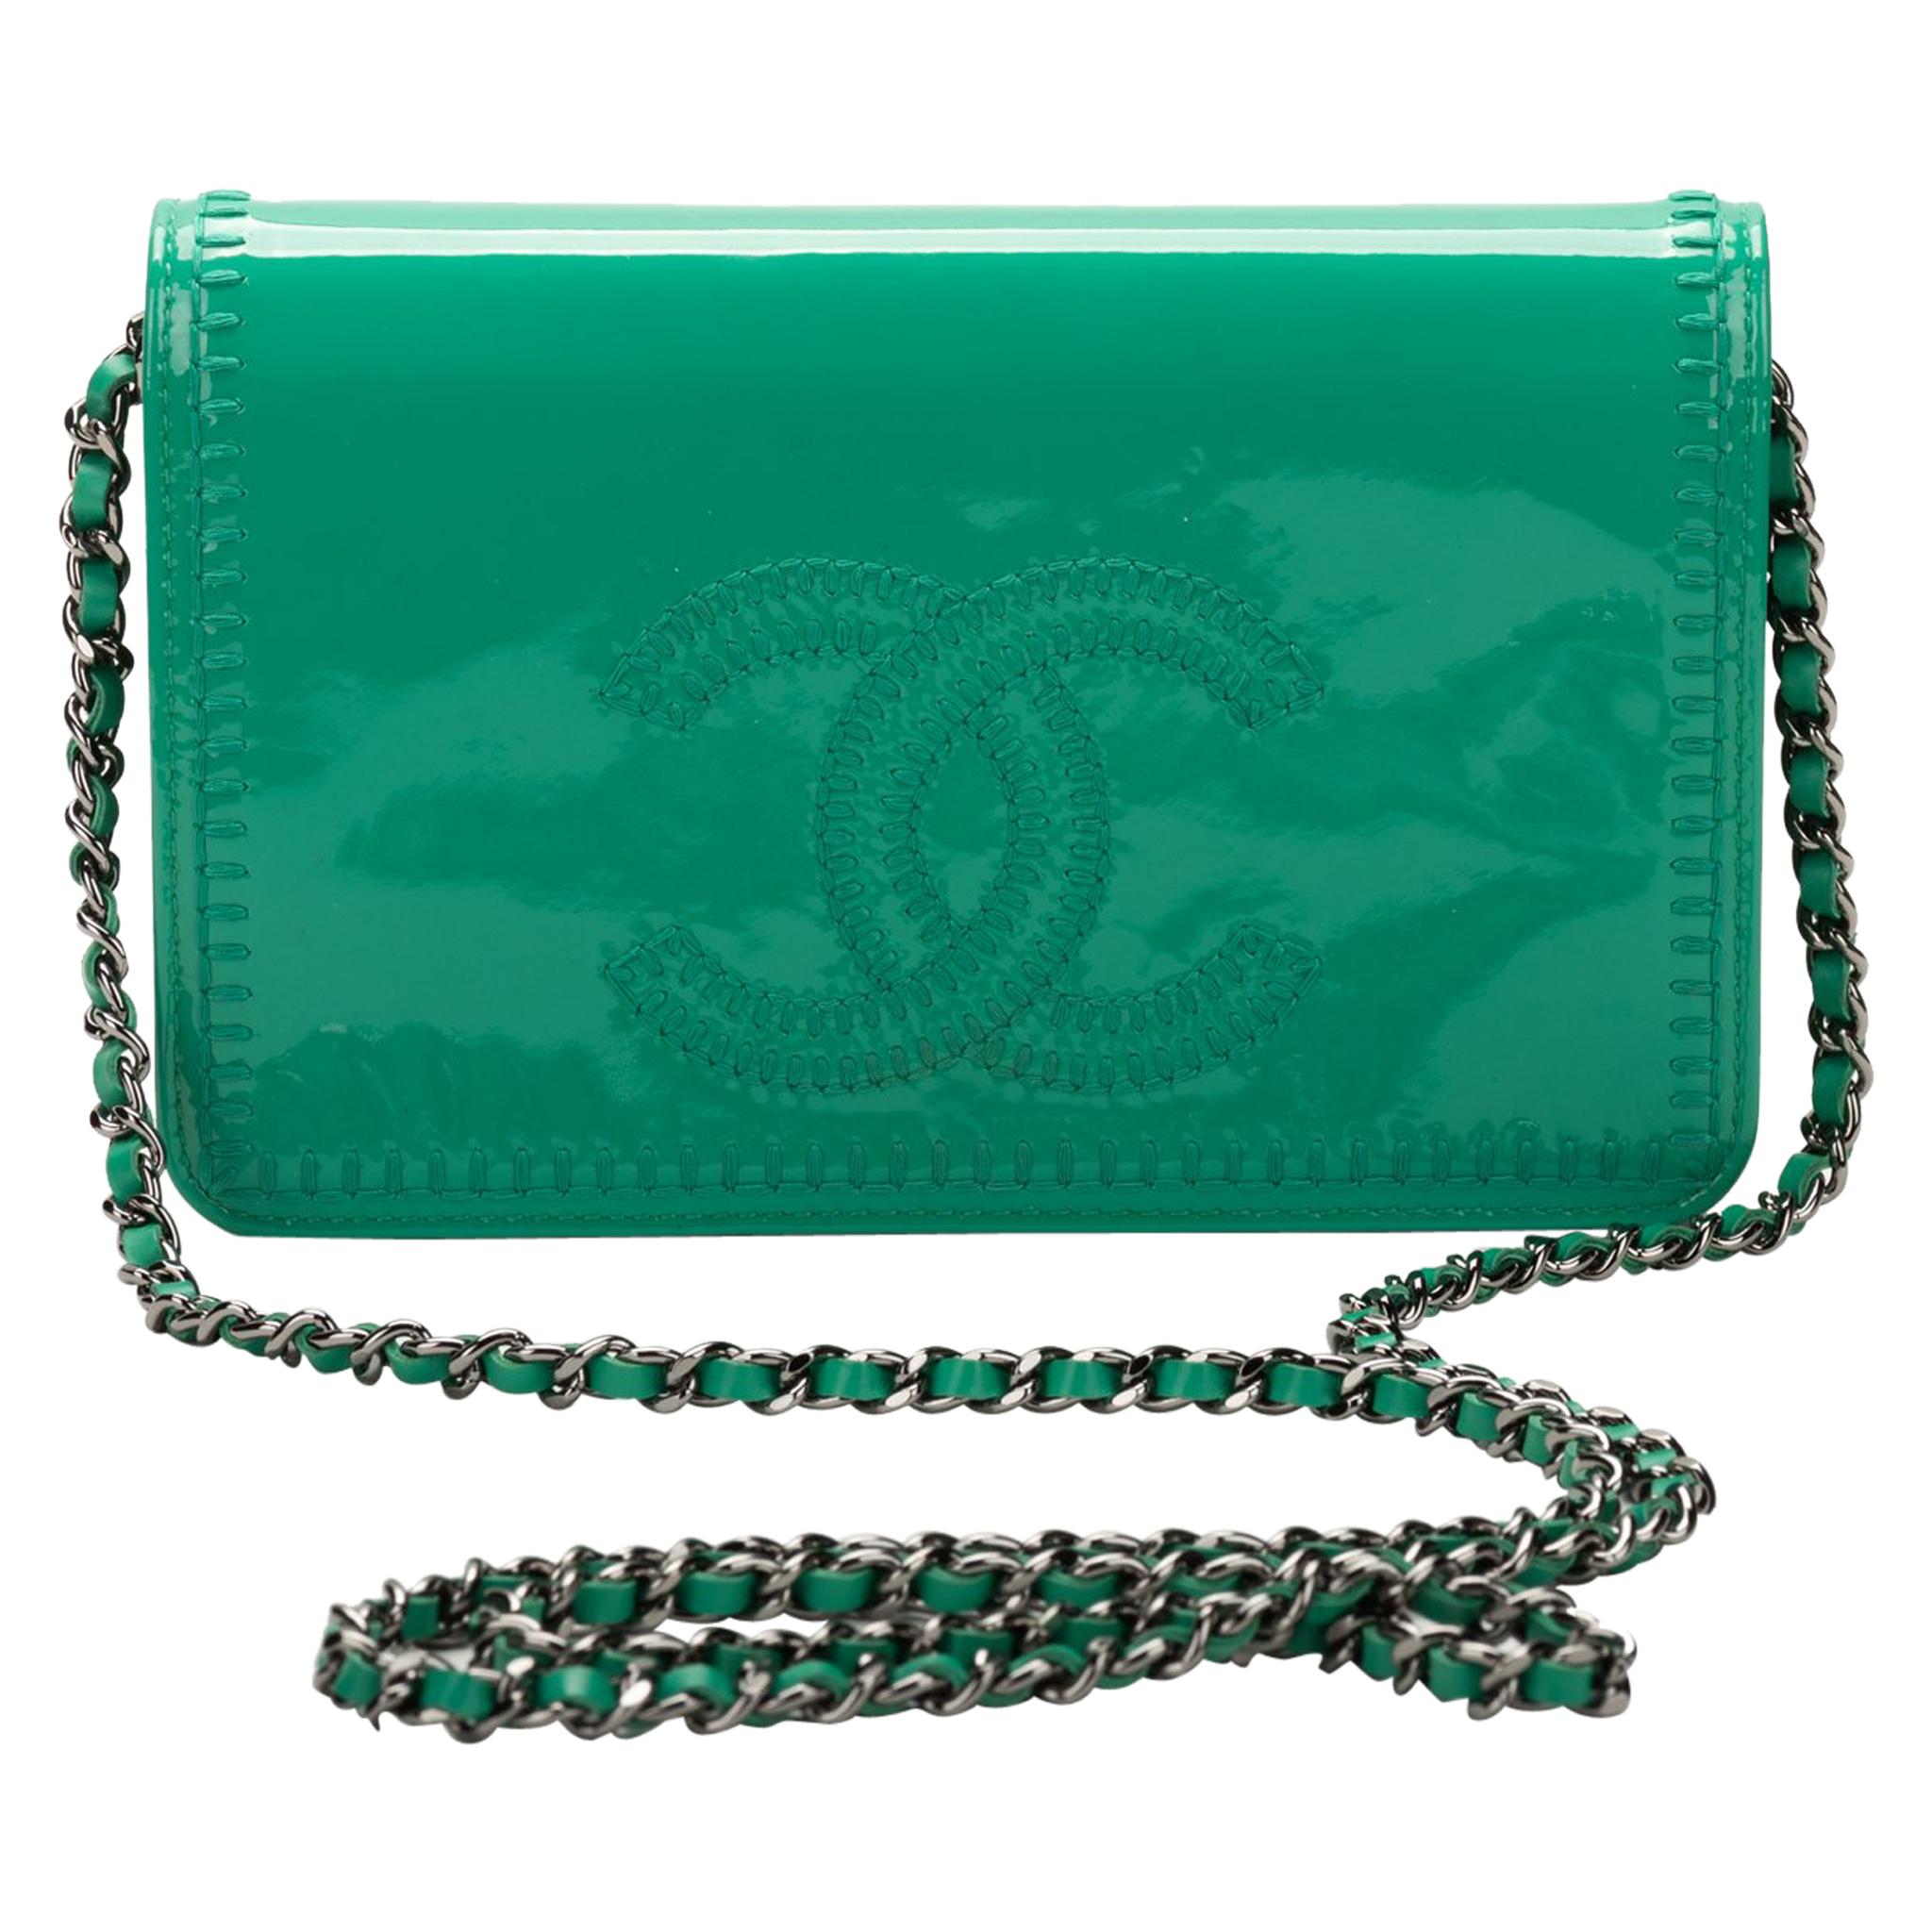 Chanel Emerald Green Patent Cross Body Bag